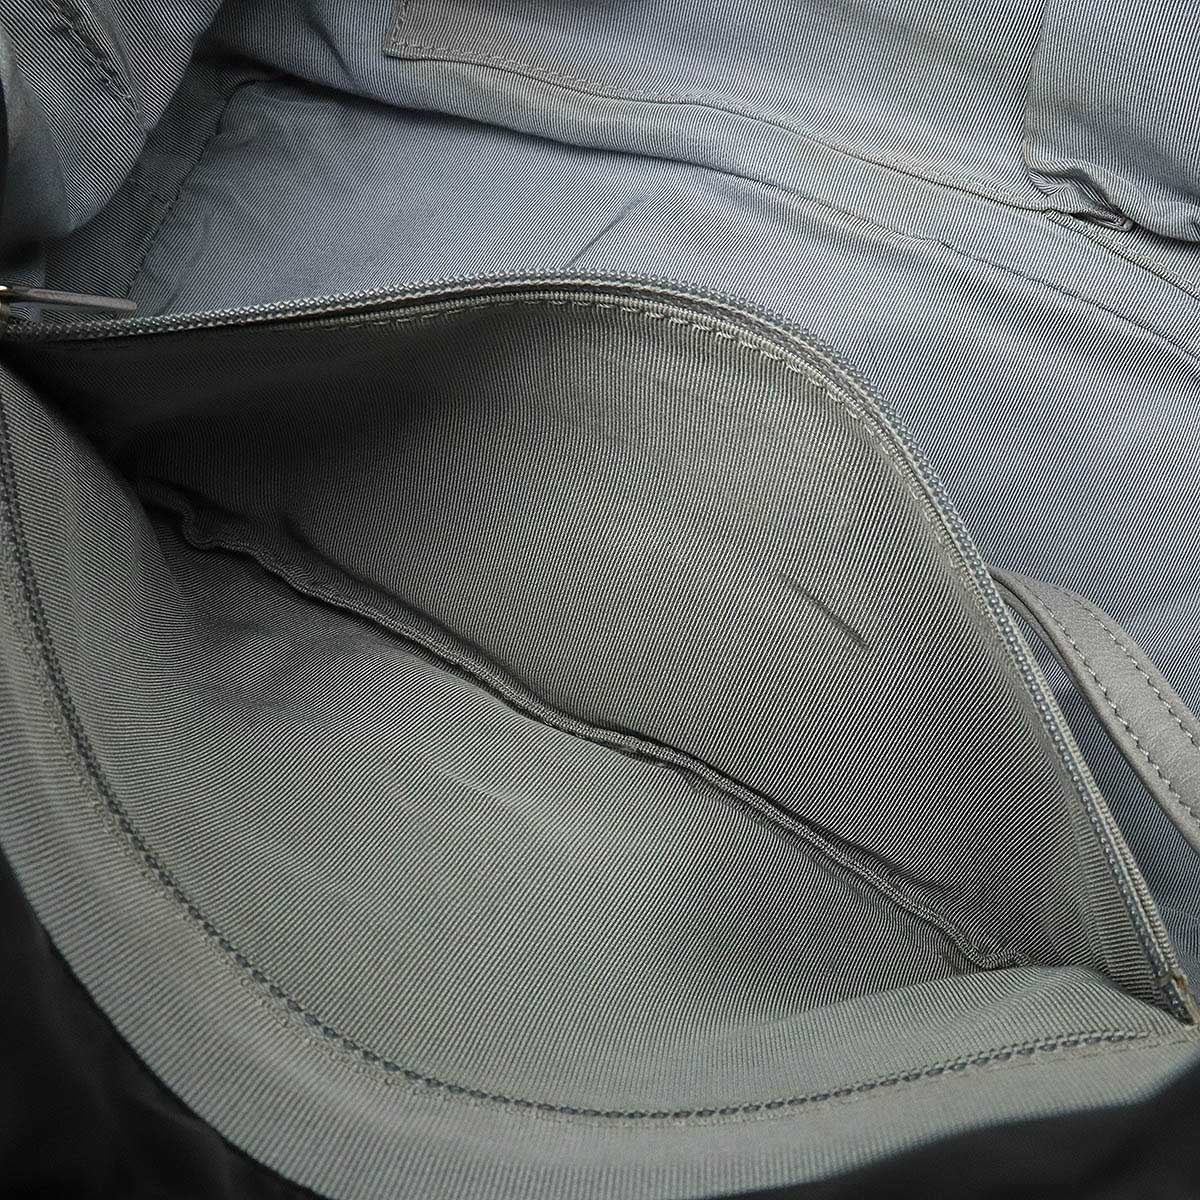 CHANEL CHANEL PARIVISANCE KILTING Chain Shoulder Bag Nylon Dark Grey Black Silver  A50633